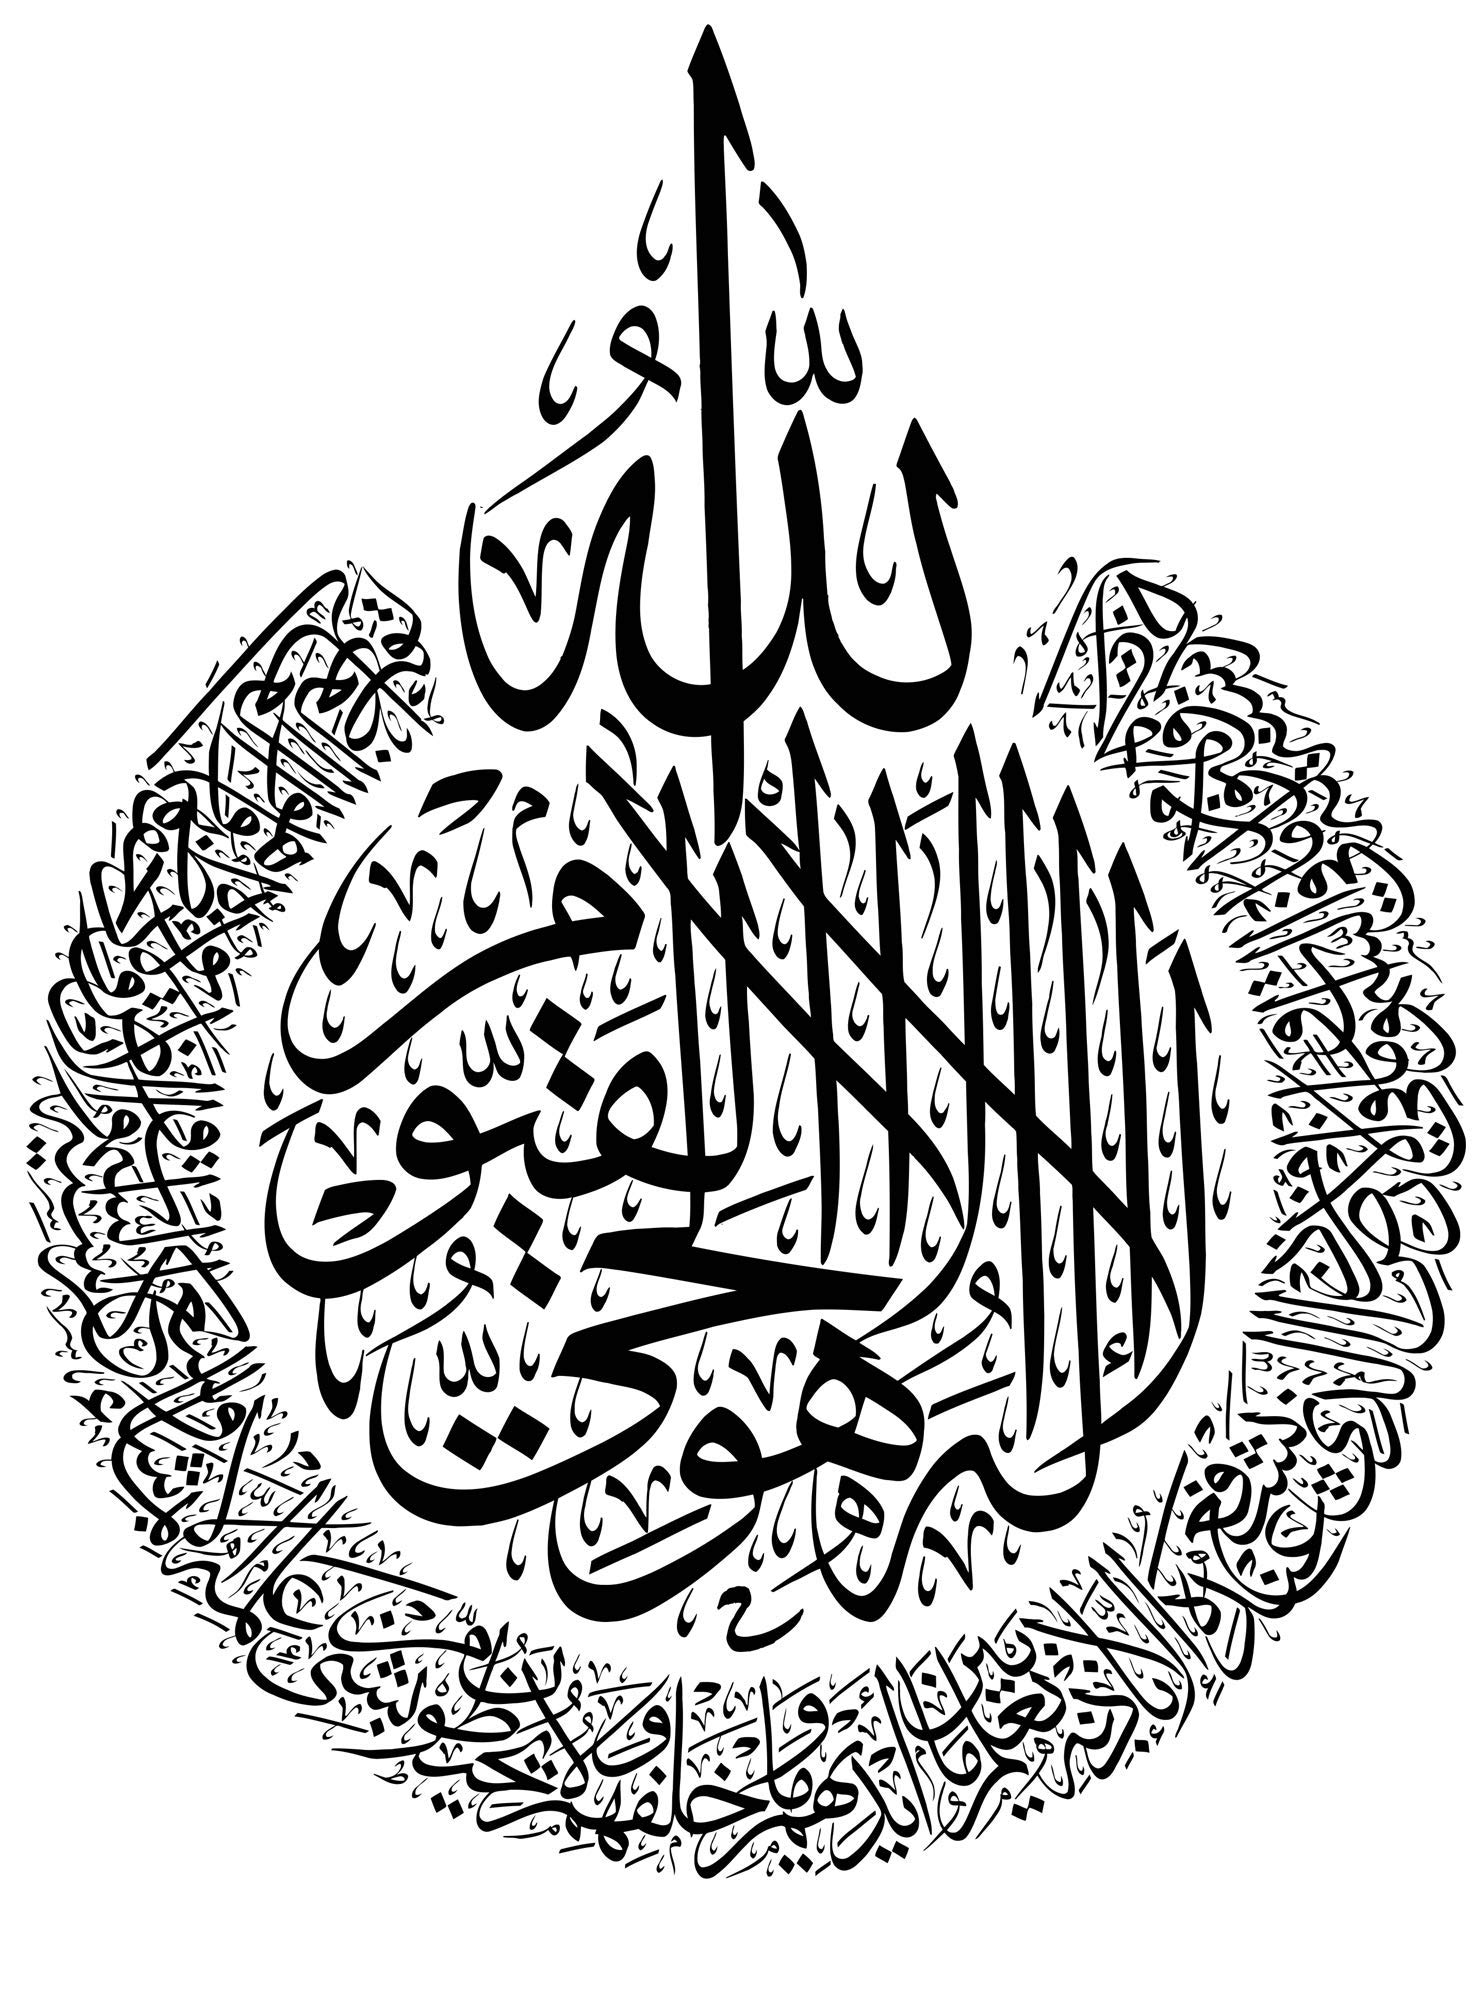 Islamic symbol of a mirror reflecting vomit